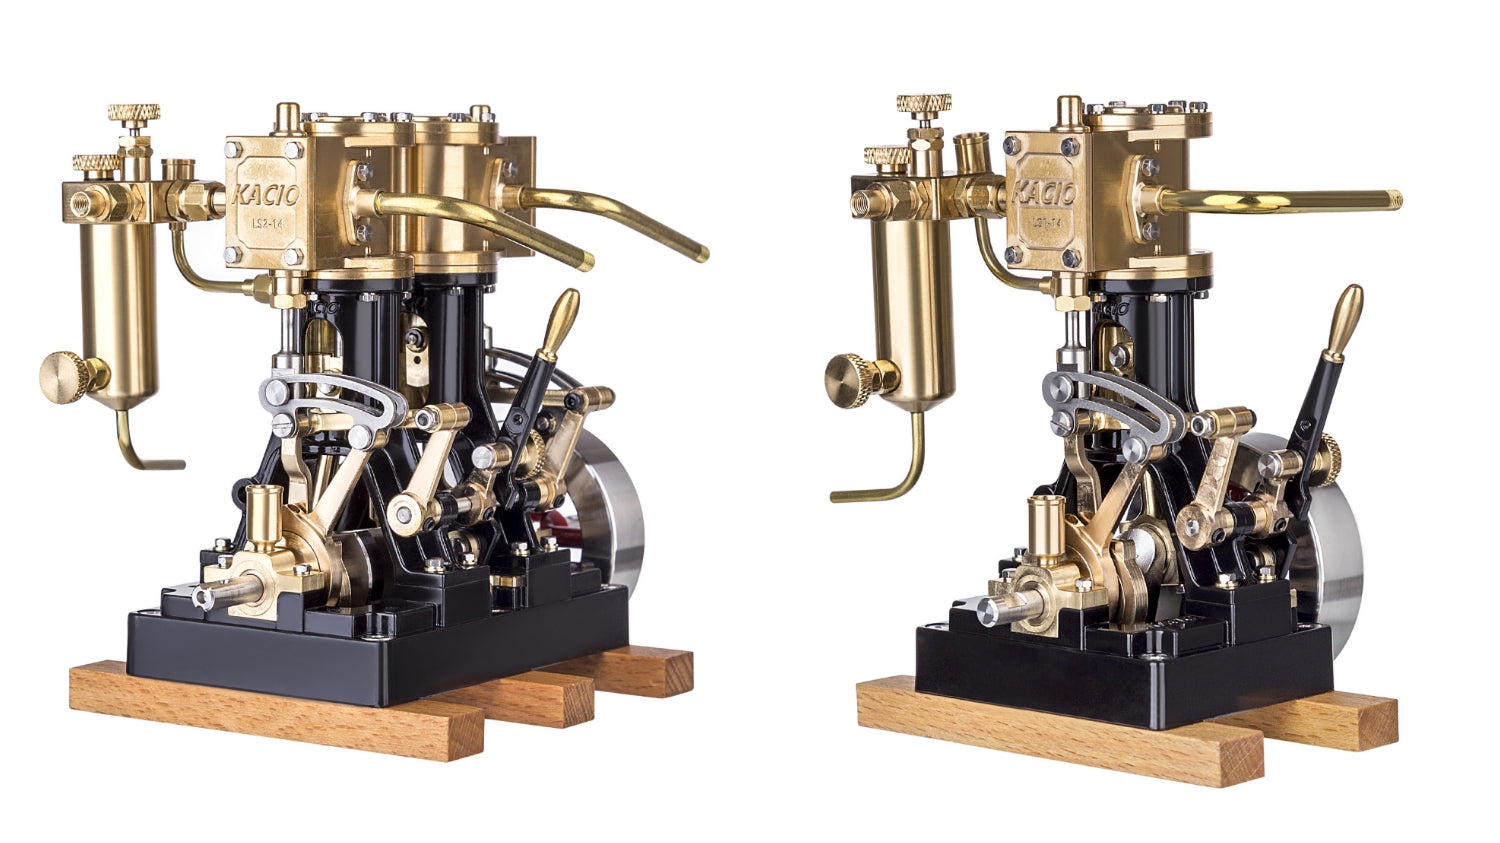 Steam Engine Model - KACIO LS1-14 and LS2-14 Reciprocating Steam Engine - Choose the Steam Engine You Like